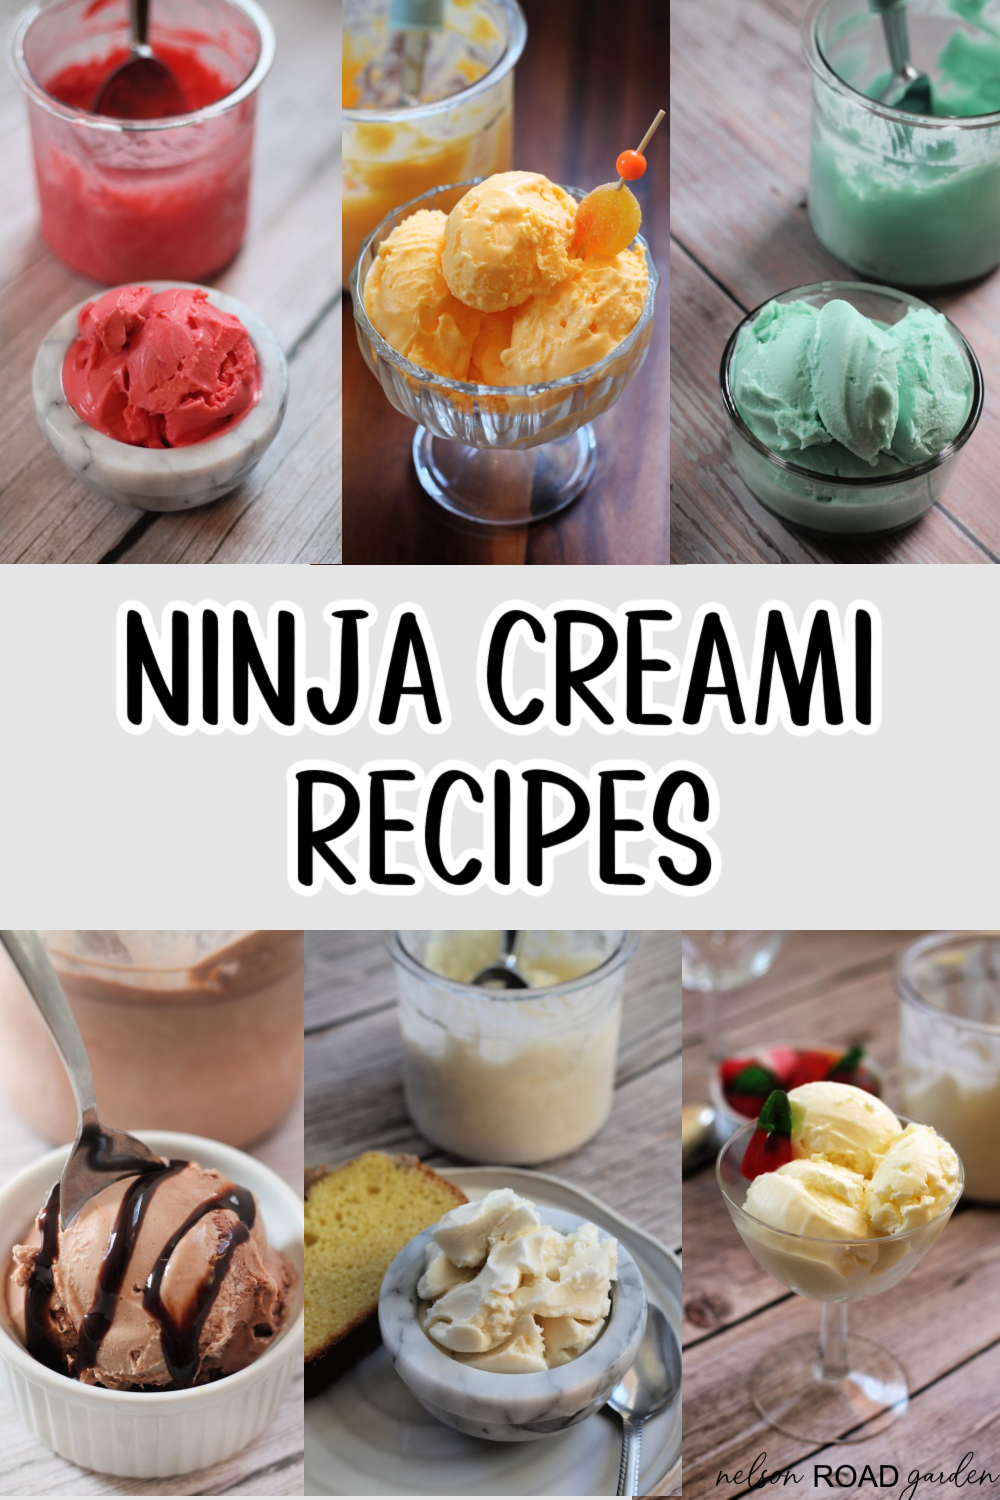 Ninja Creami Orange Ice Cream - Nelson Road Garden